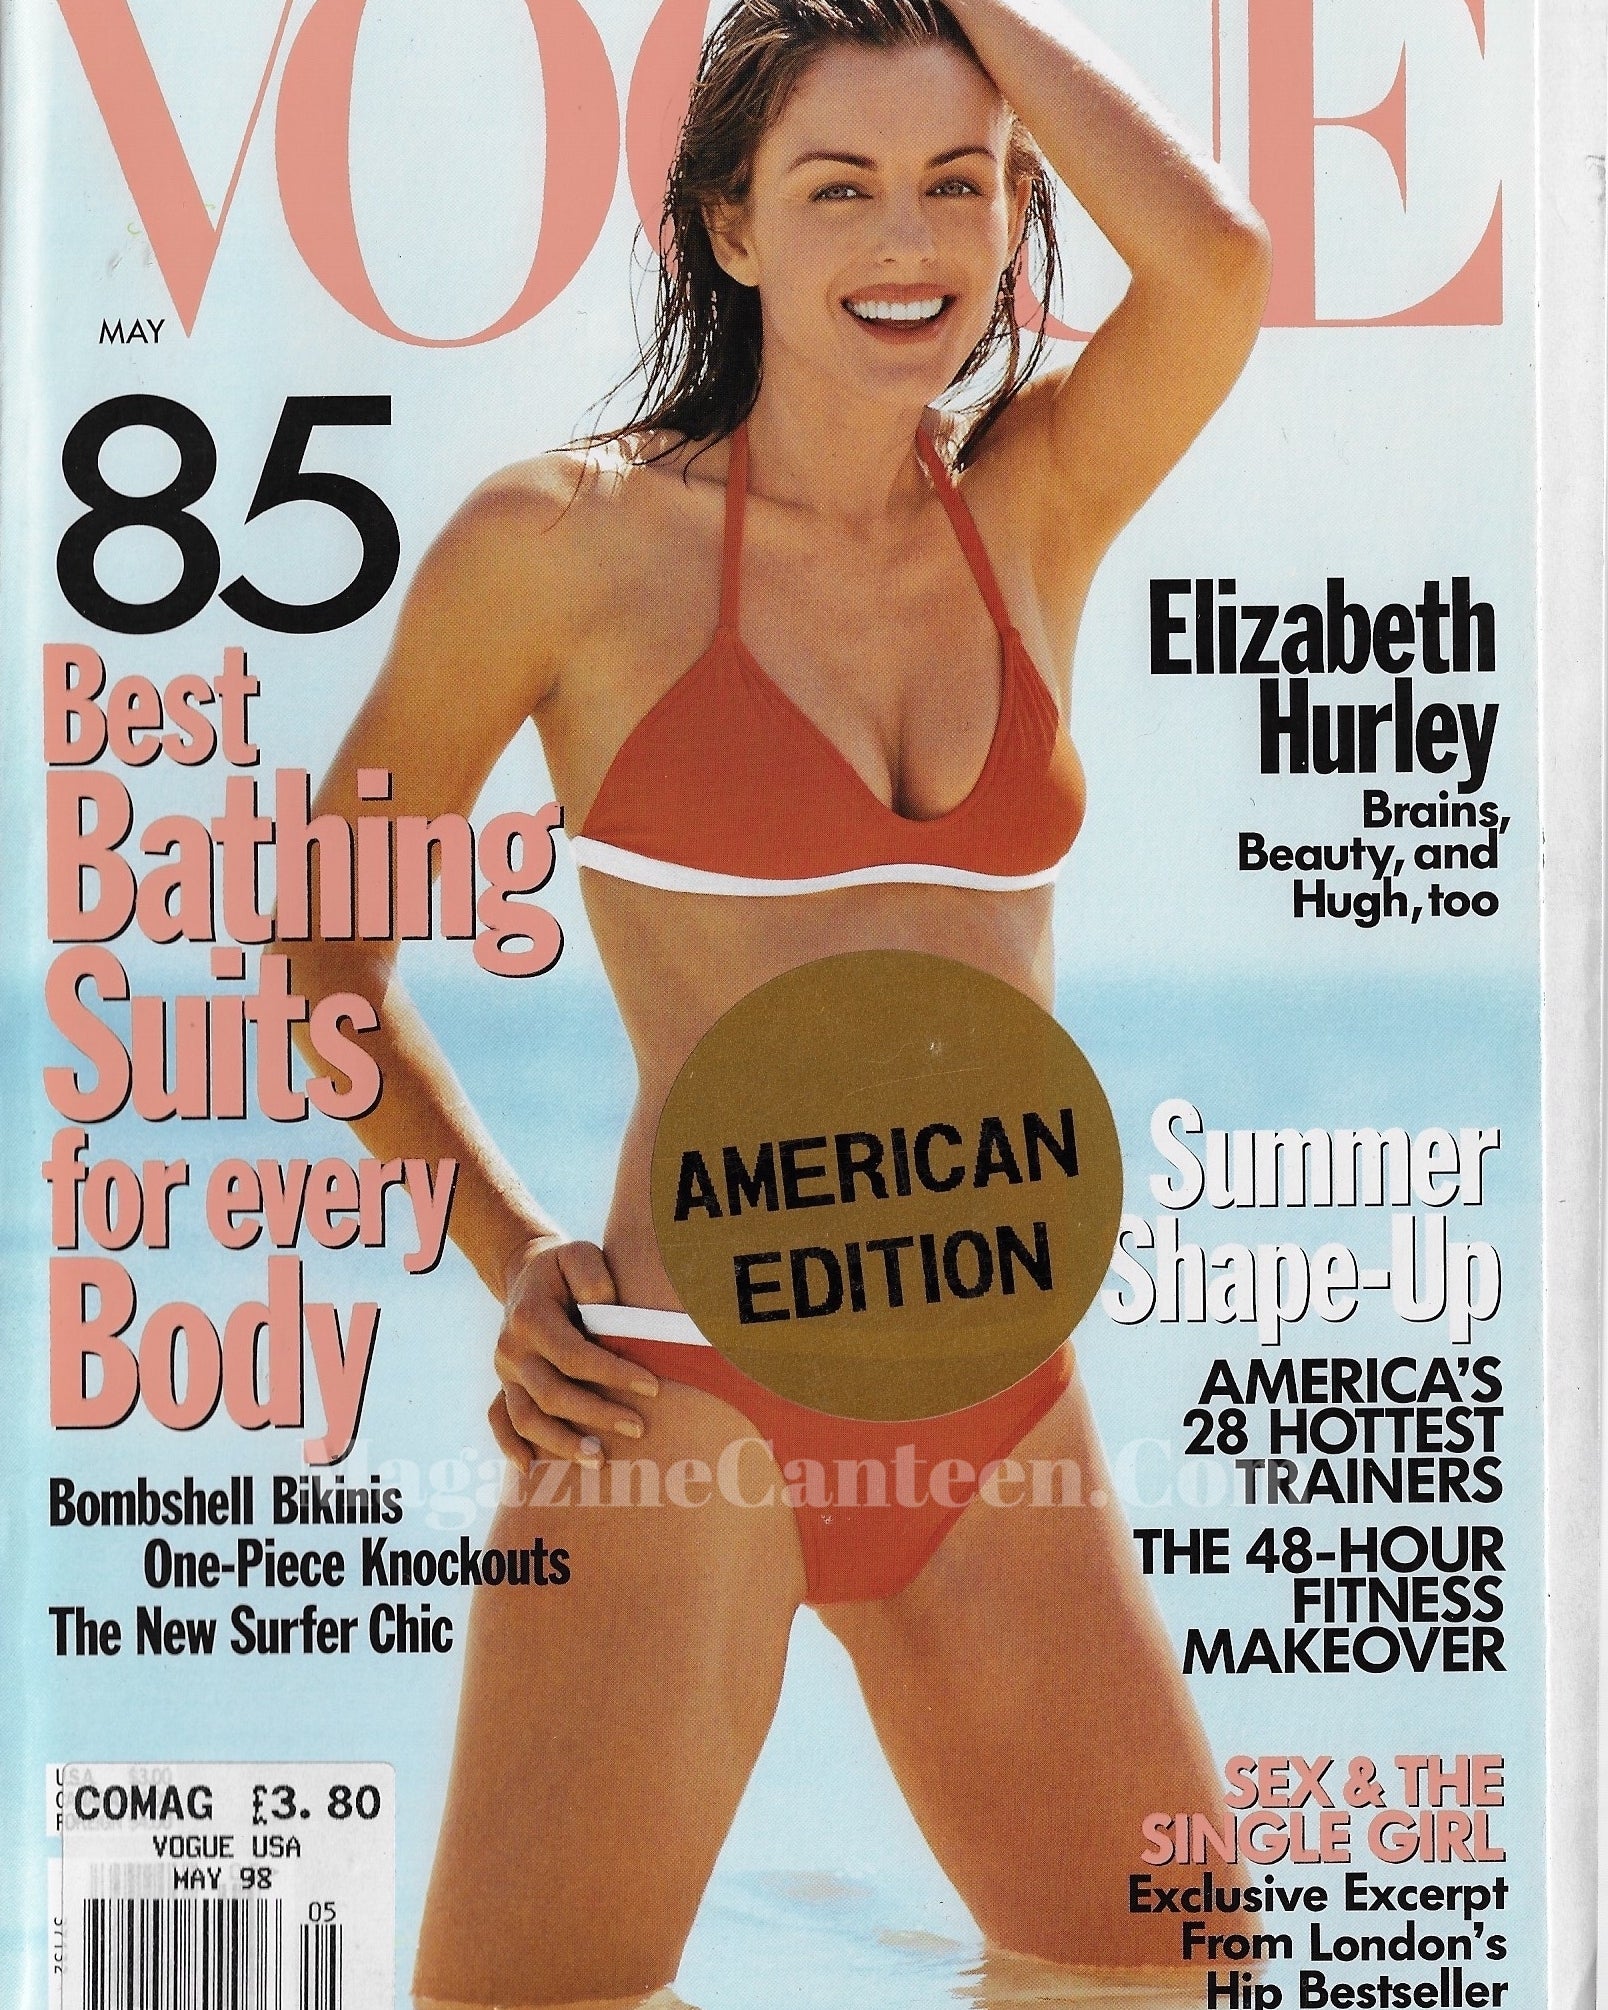 Vogue USA Magazine May 1998 - Elizabeth Hurley